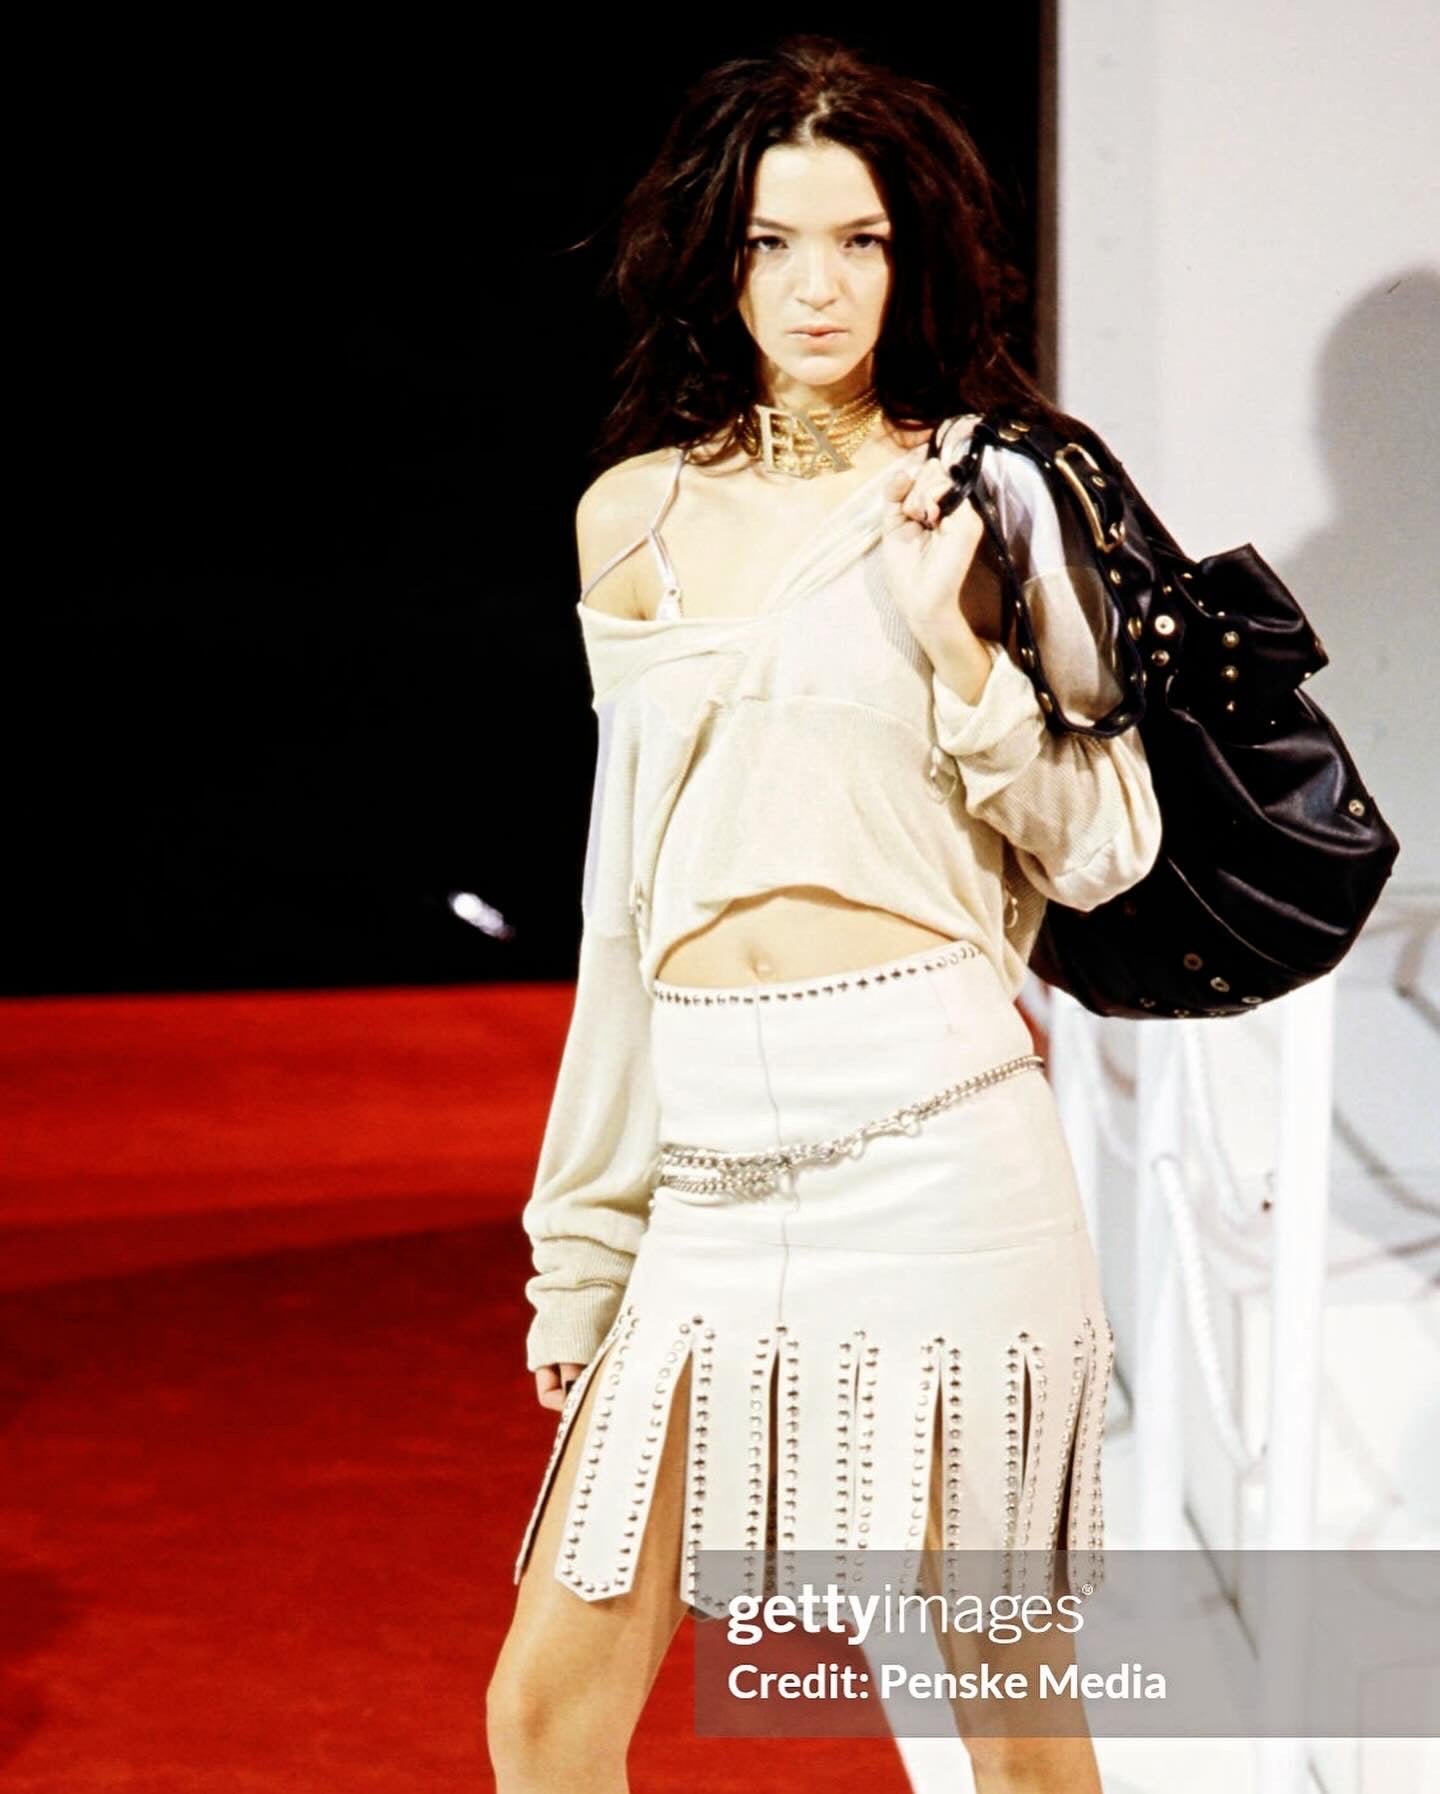 Dolce & Gabbana S/S 2003 iconic studded leather skirt + belt